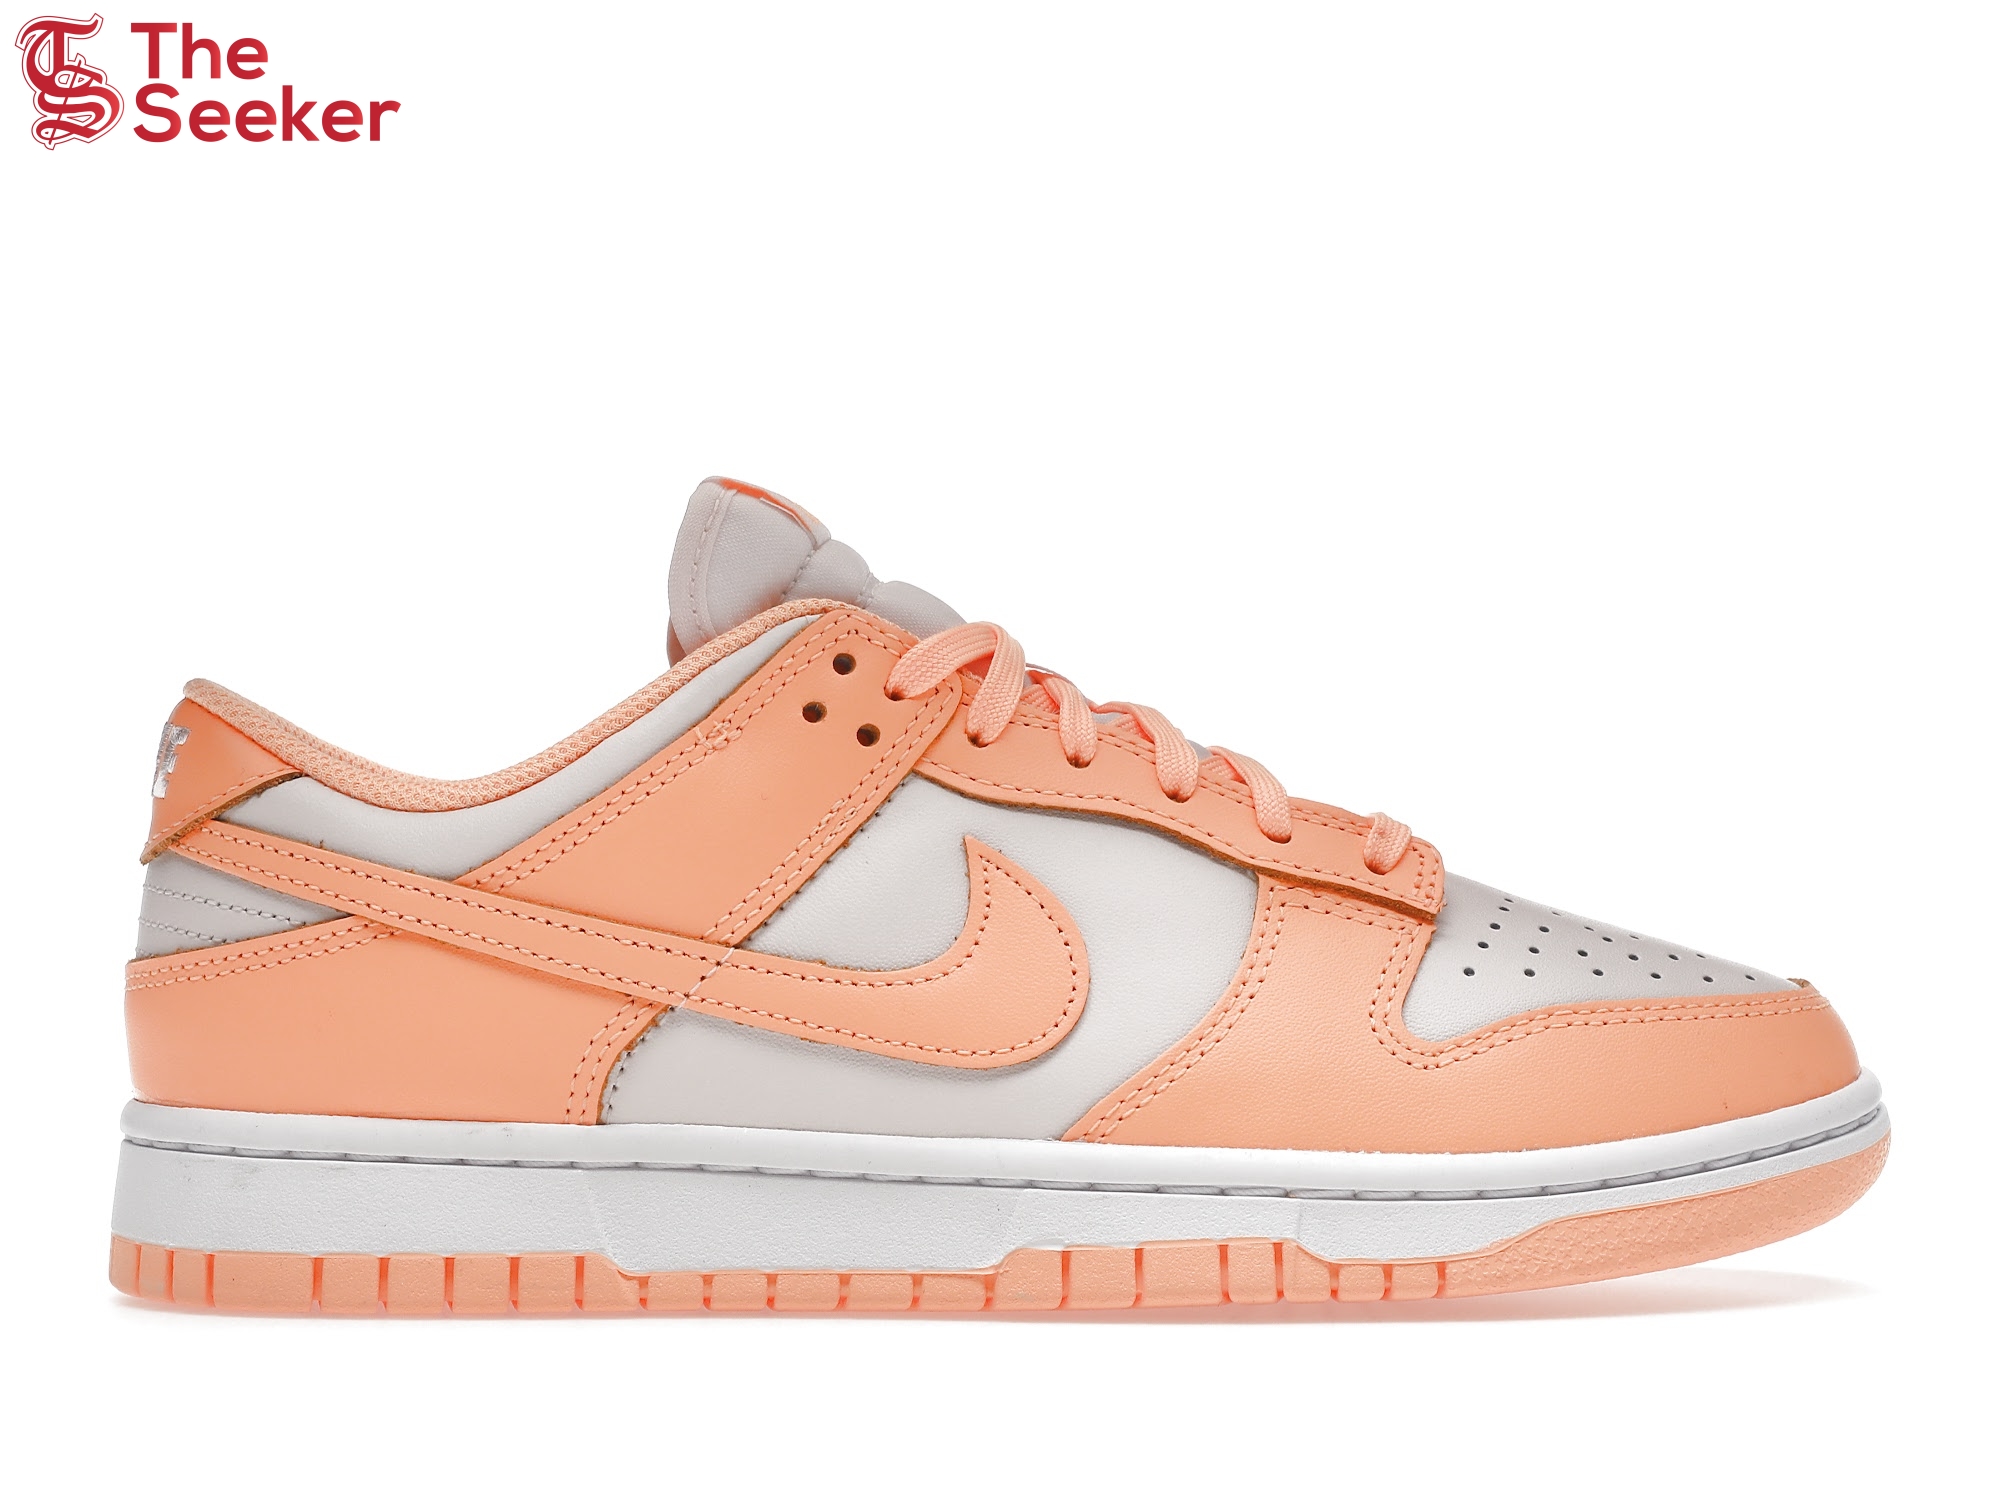 Nike Dunk Low Peach Cream (Women's)